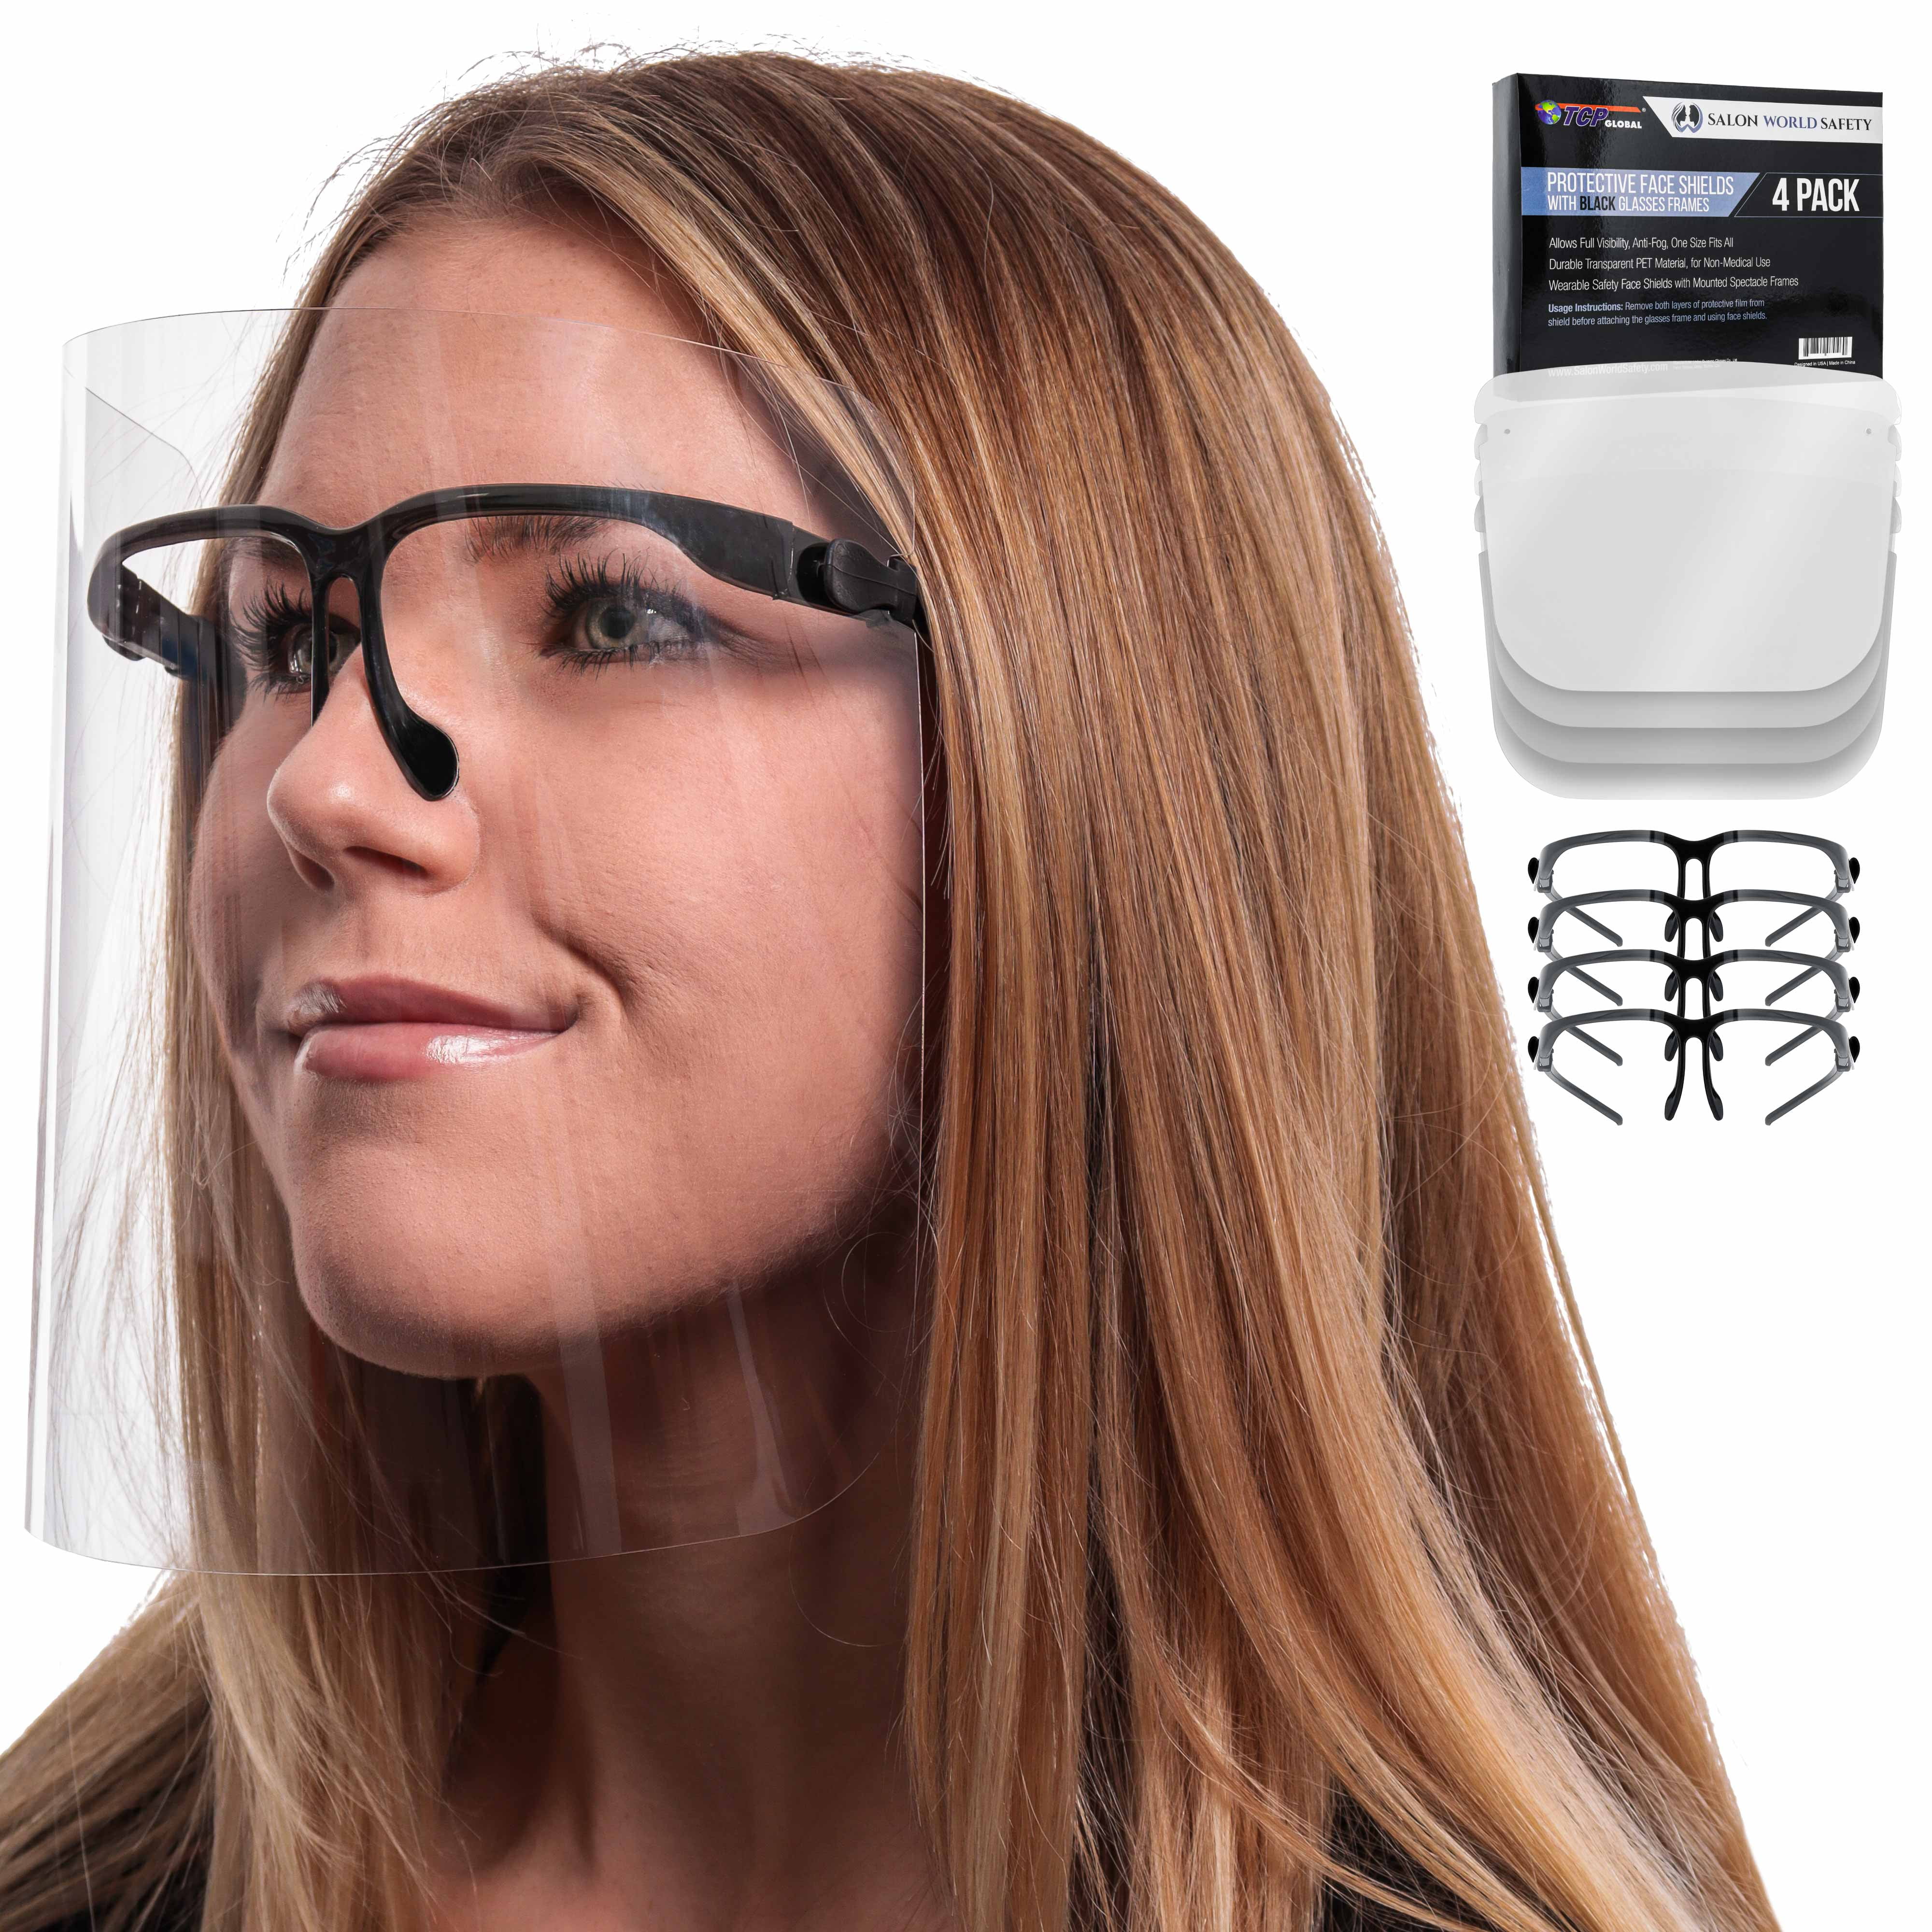 Details about   10X Black Glasses Frame Face Shield Glasses Protector Spray Prevention US Seller 